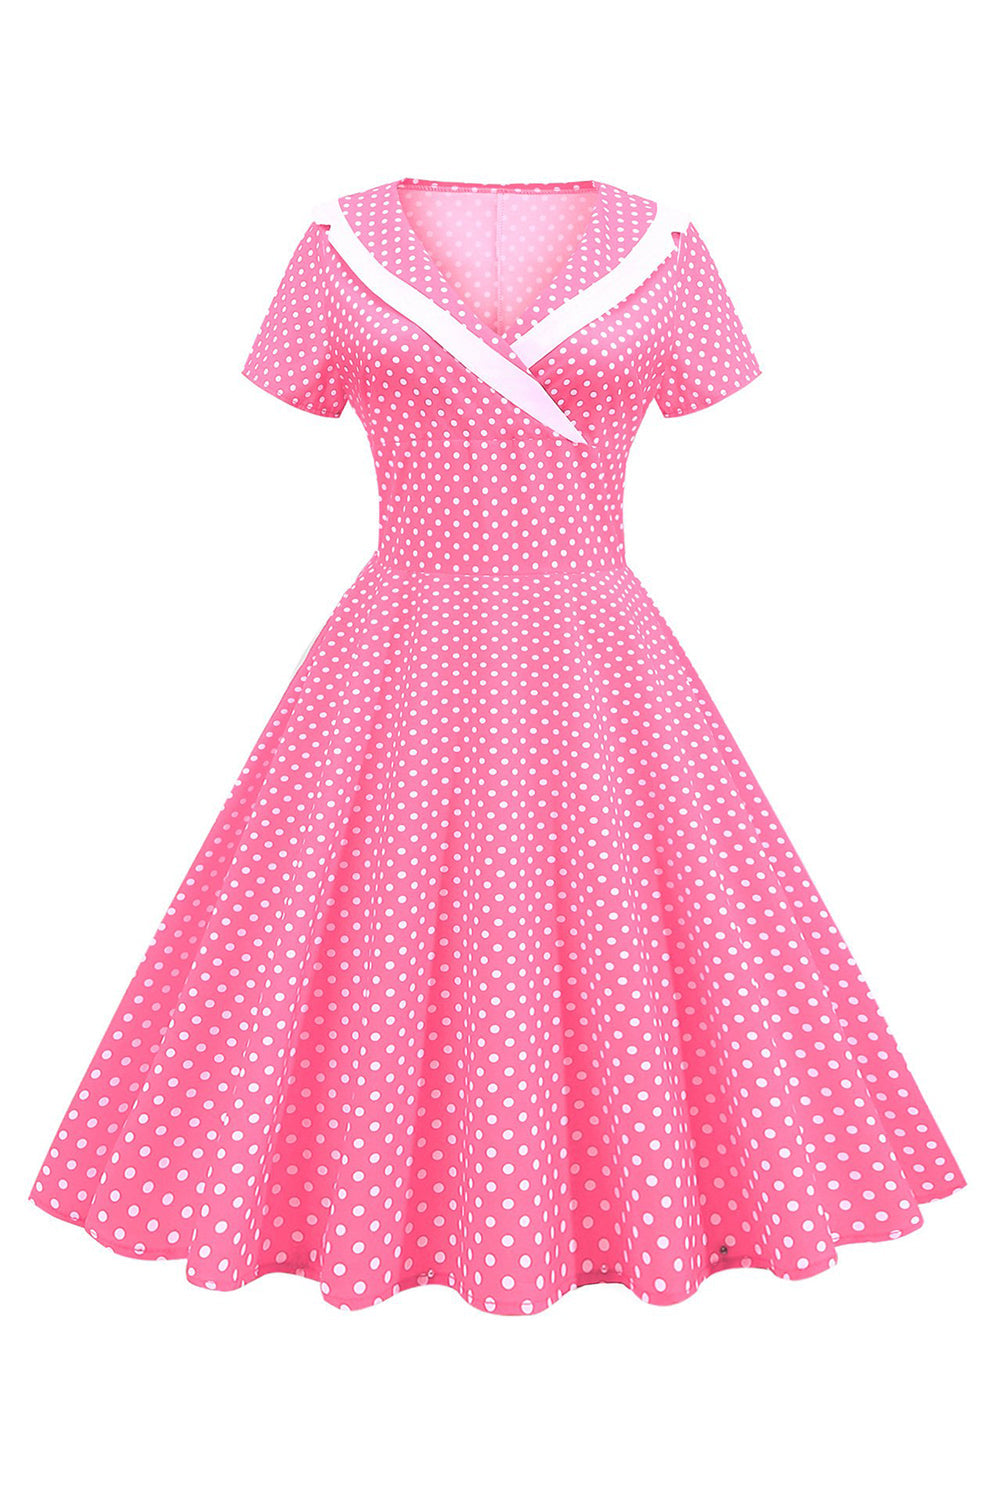 Rosa Polka Dots V-Ausschnitt Kurzärmeliges Kleid aus den 1950er Jahren